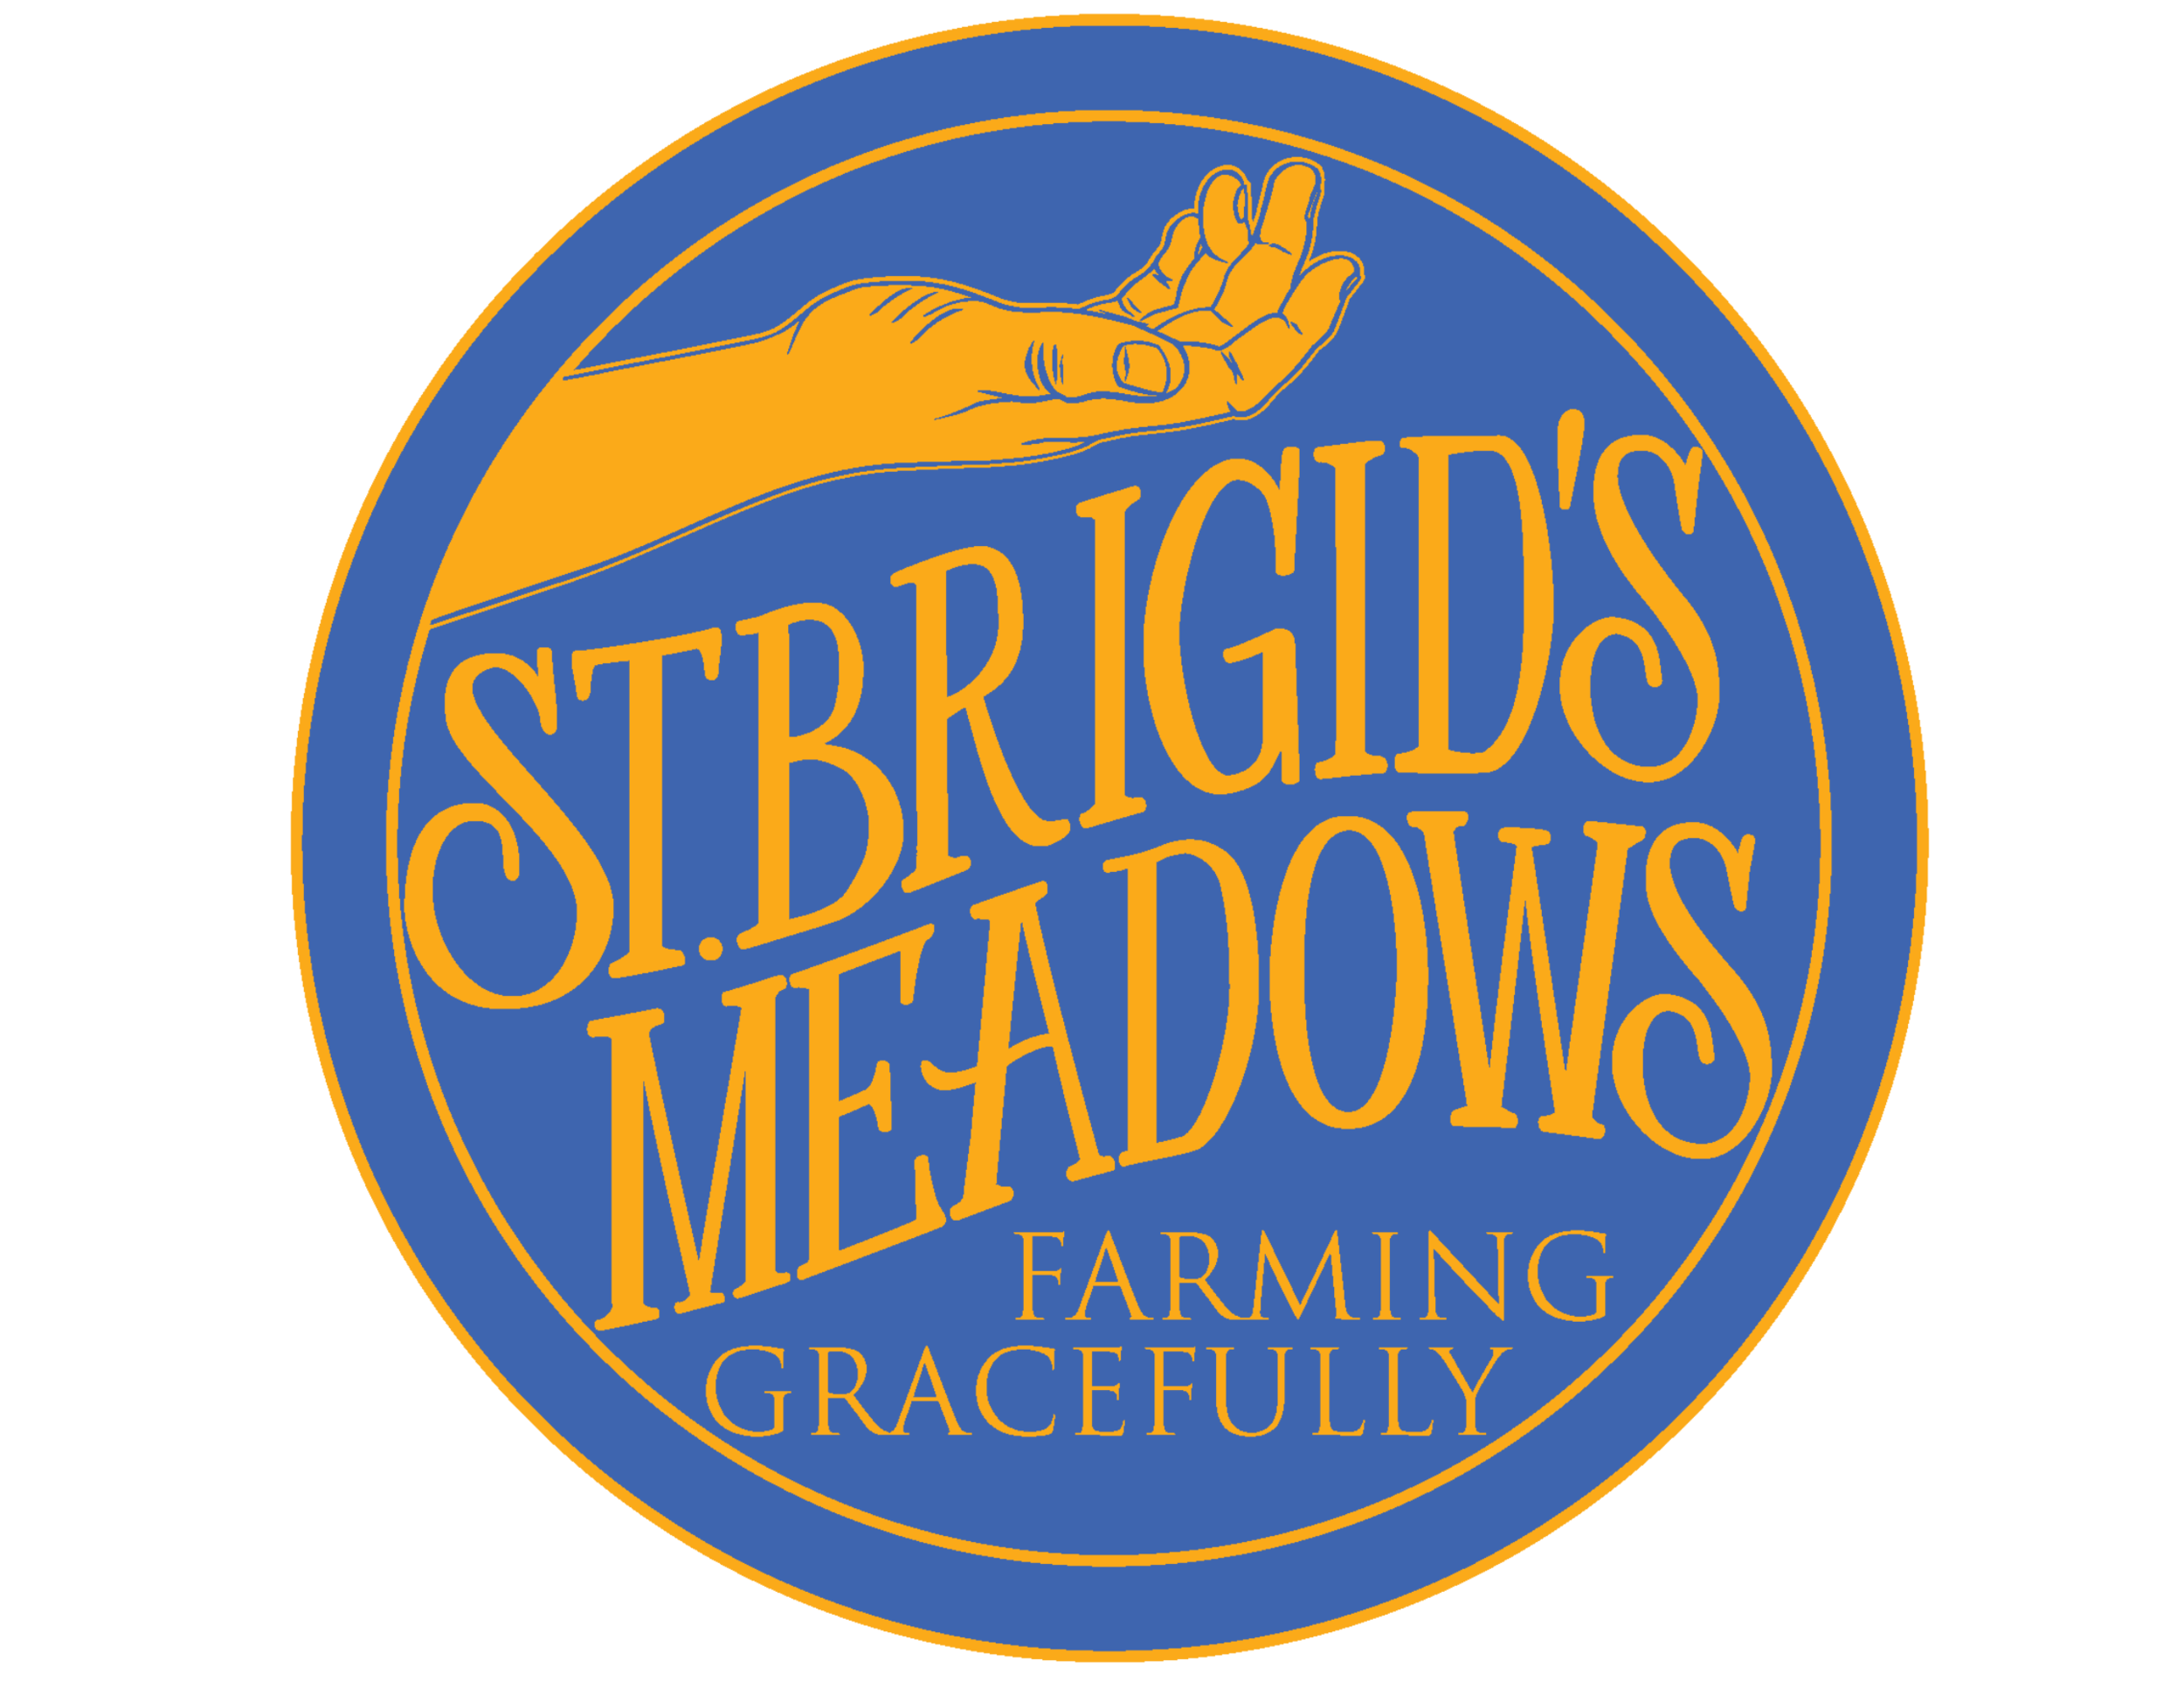 St. Brigid's Meadows